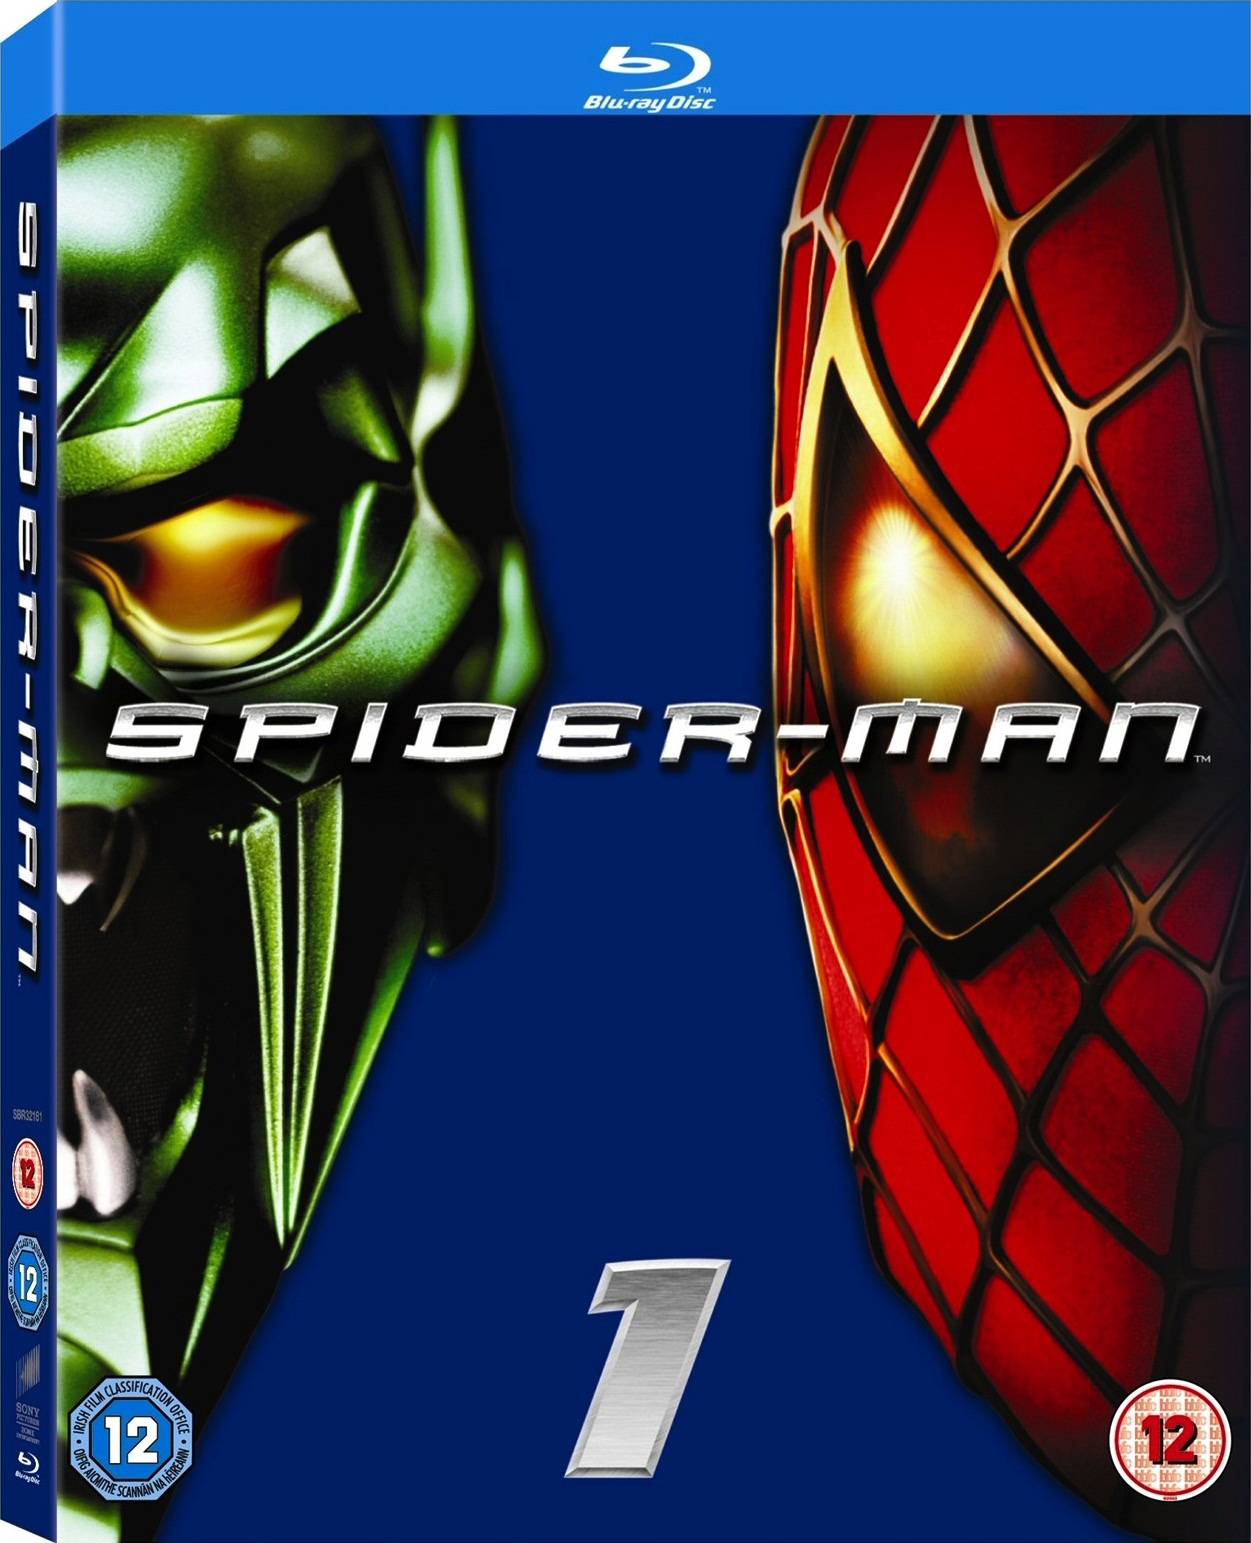 [蜘蛛侠1].Spider-Man.I.2002.CHN.BluRay.1080p.AVC.DTS-HD.MA.5.1-HDBiger   42.31G( ]+ g* K. k$ h6 ?-2.jpg